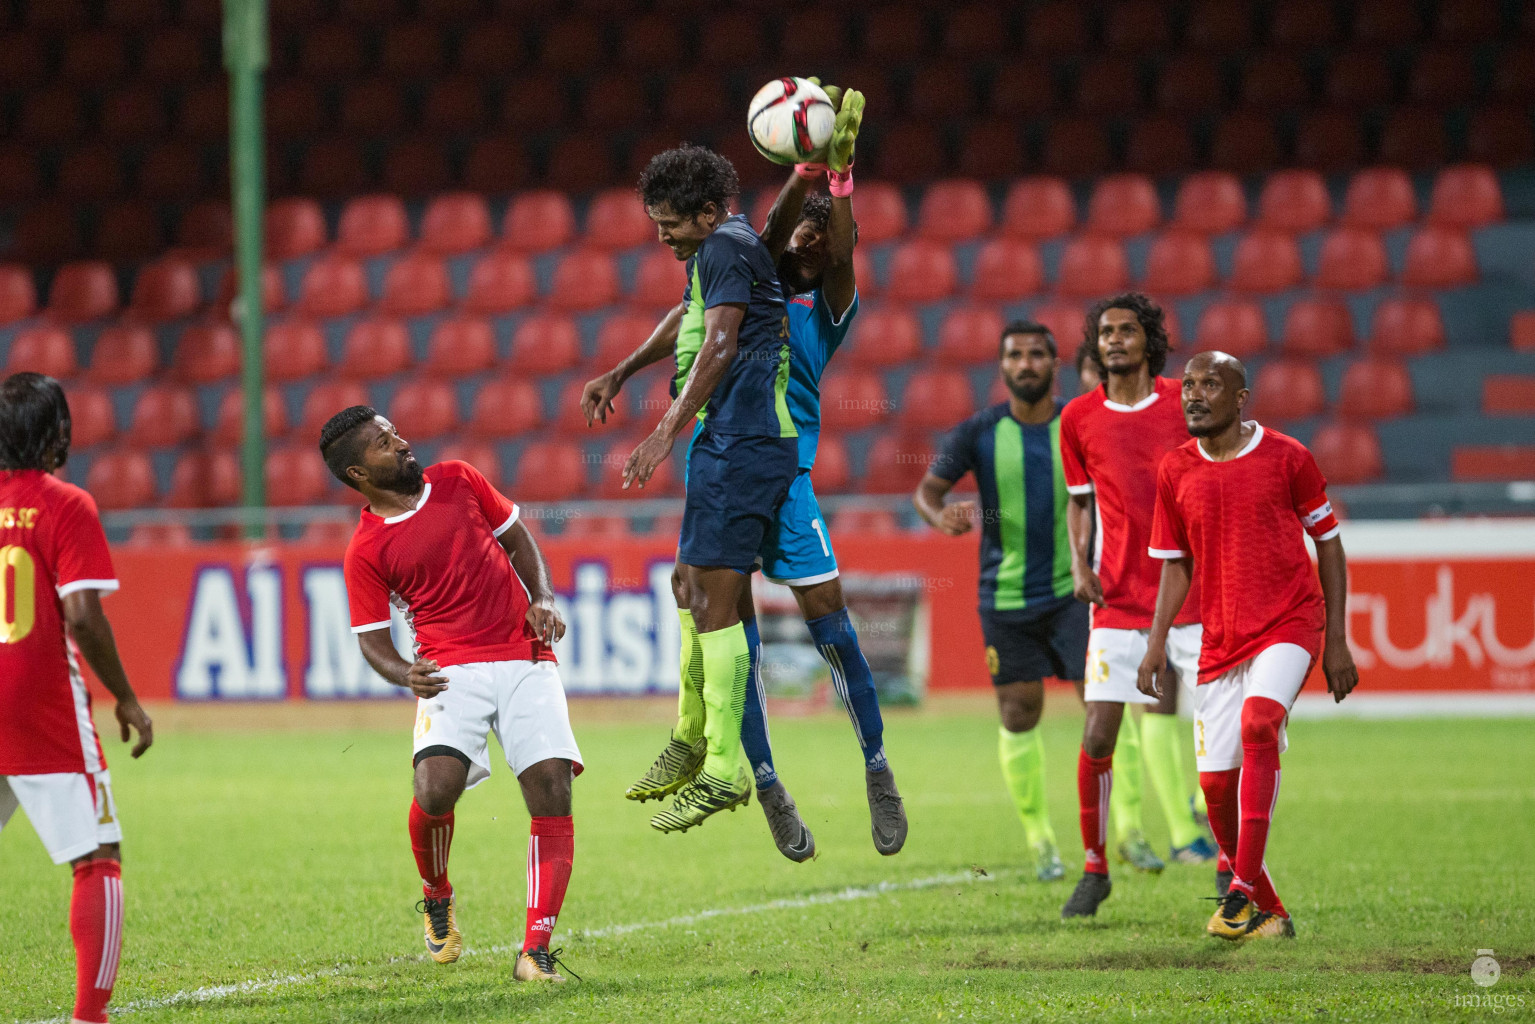 FAM 3rd Division 2018 - Super United vs The Bows,16 December 2018, Photos: Suadh Abdul Sattar/ images.mv